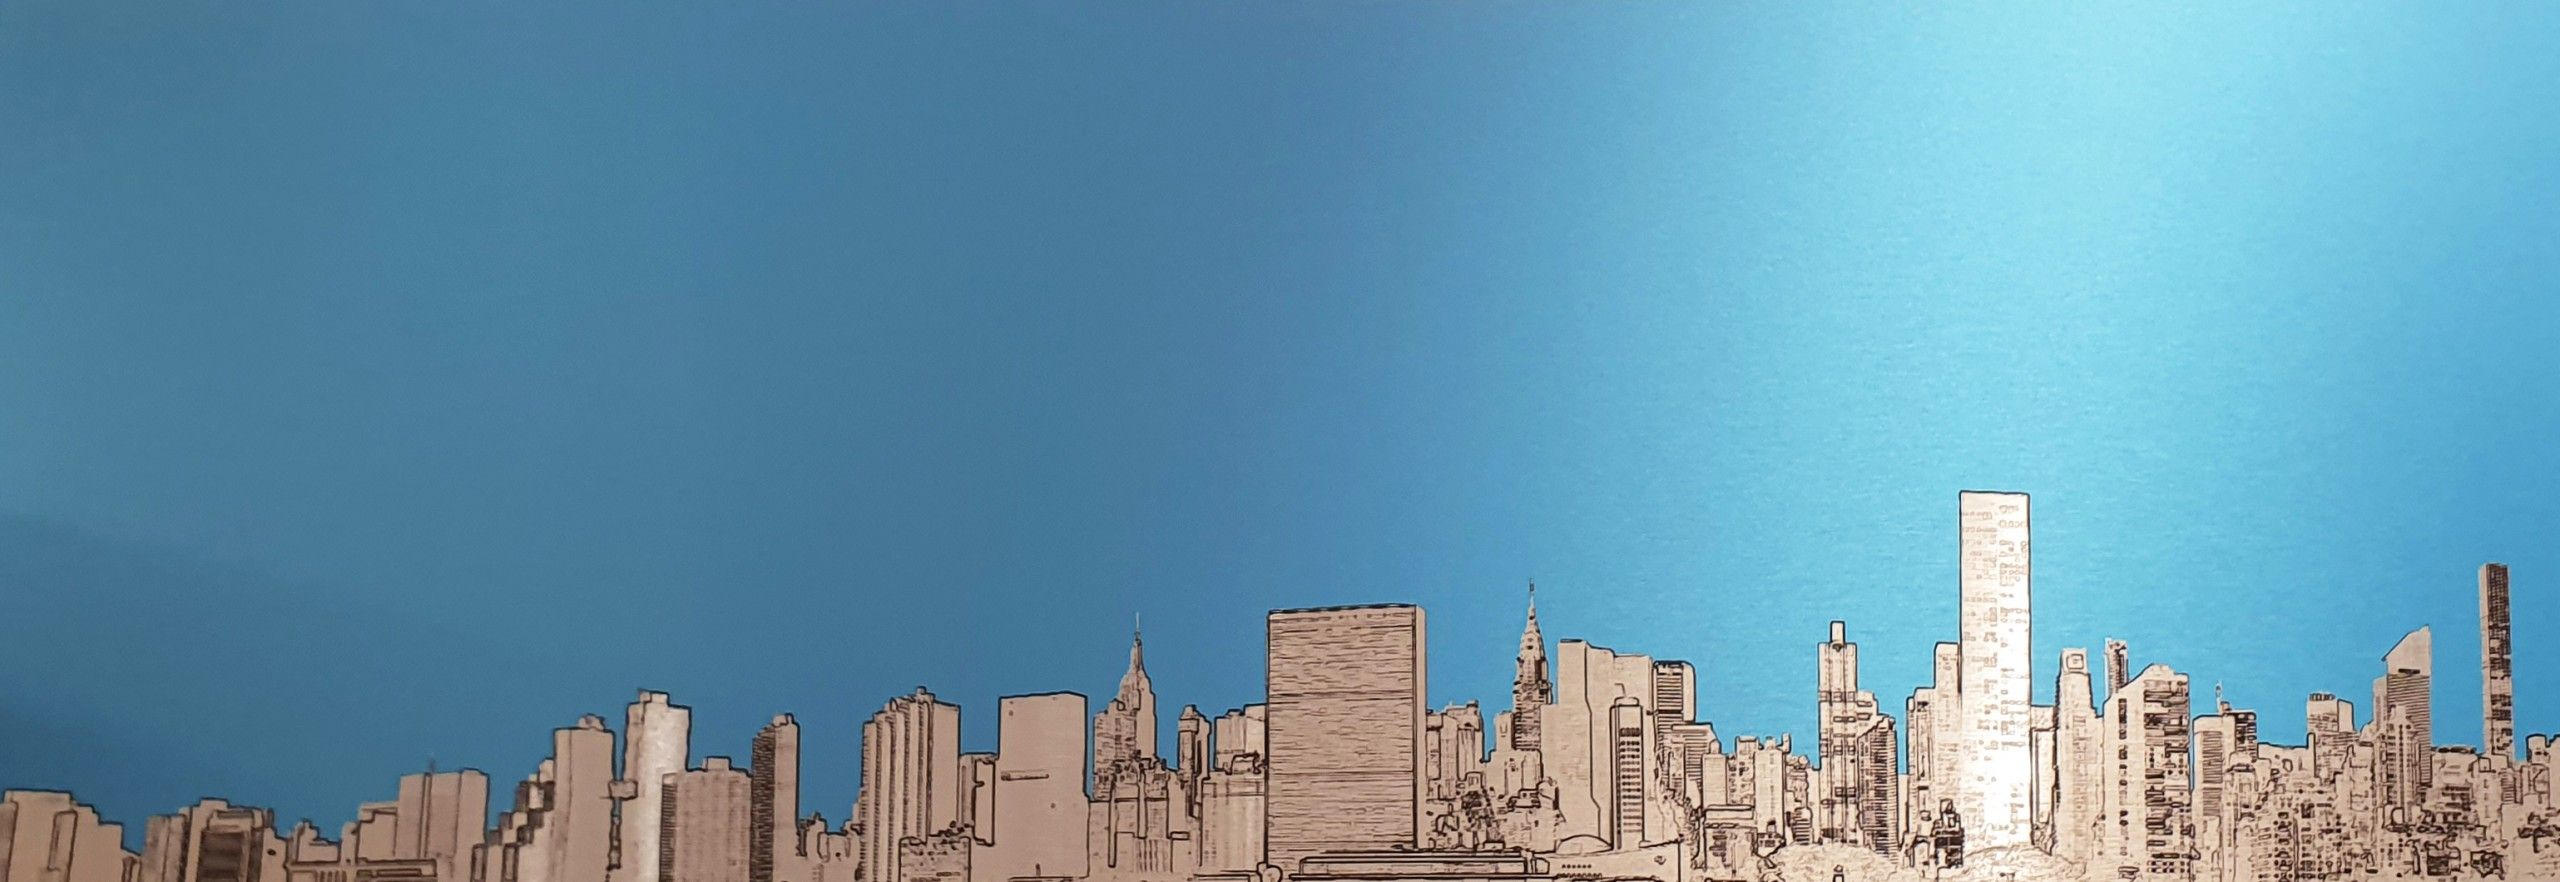 Manhattan Skyline by Michael Wallner